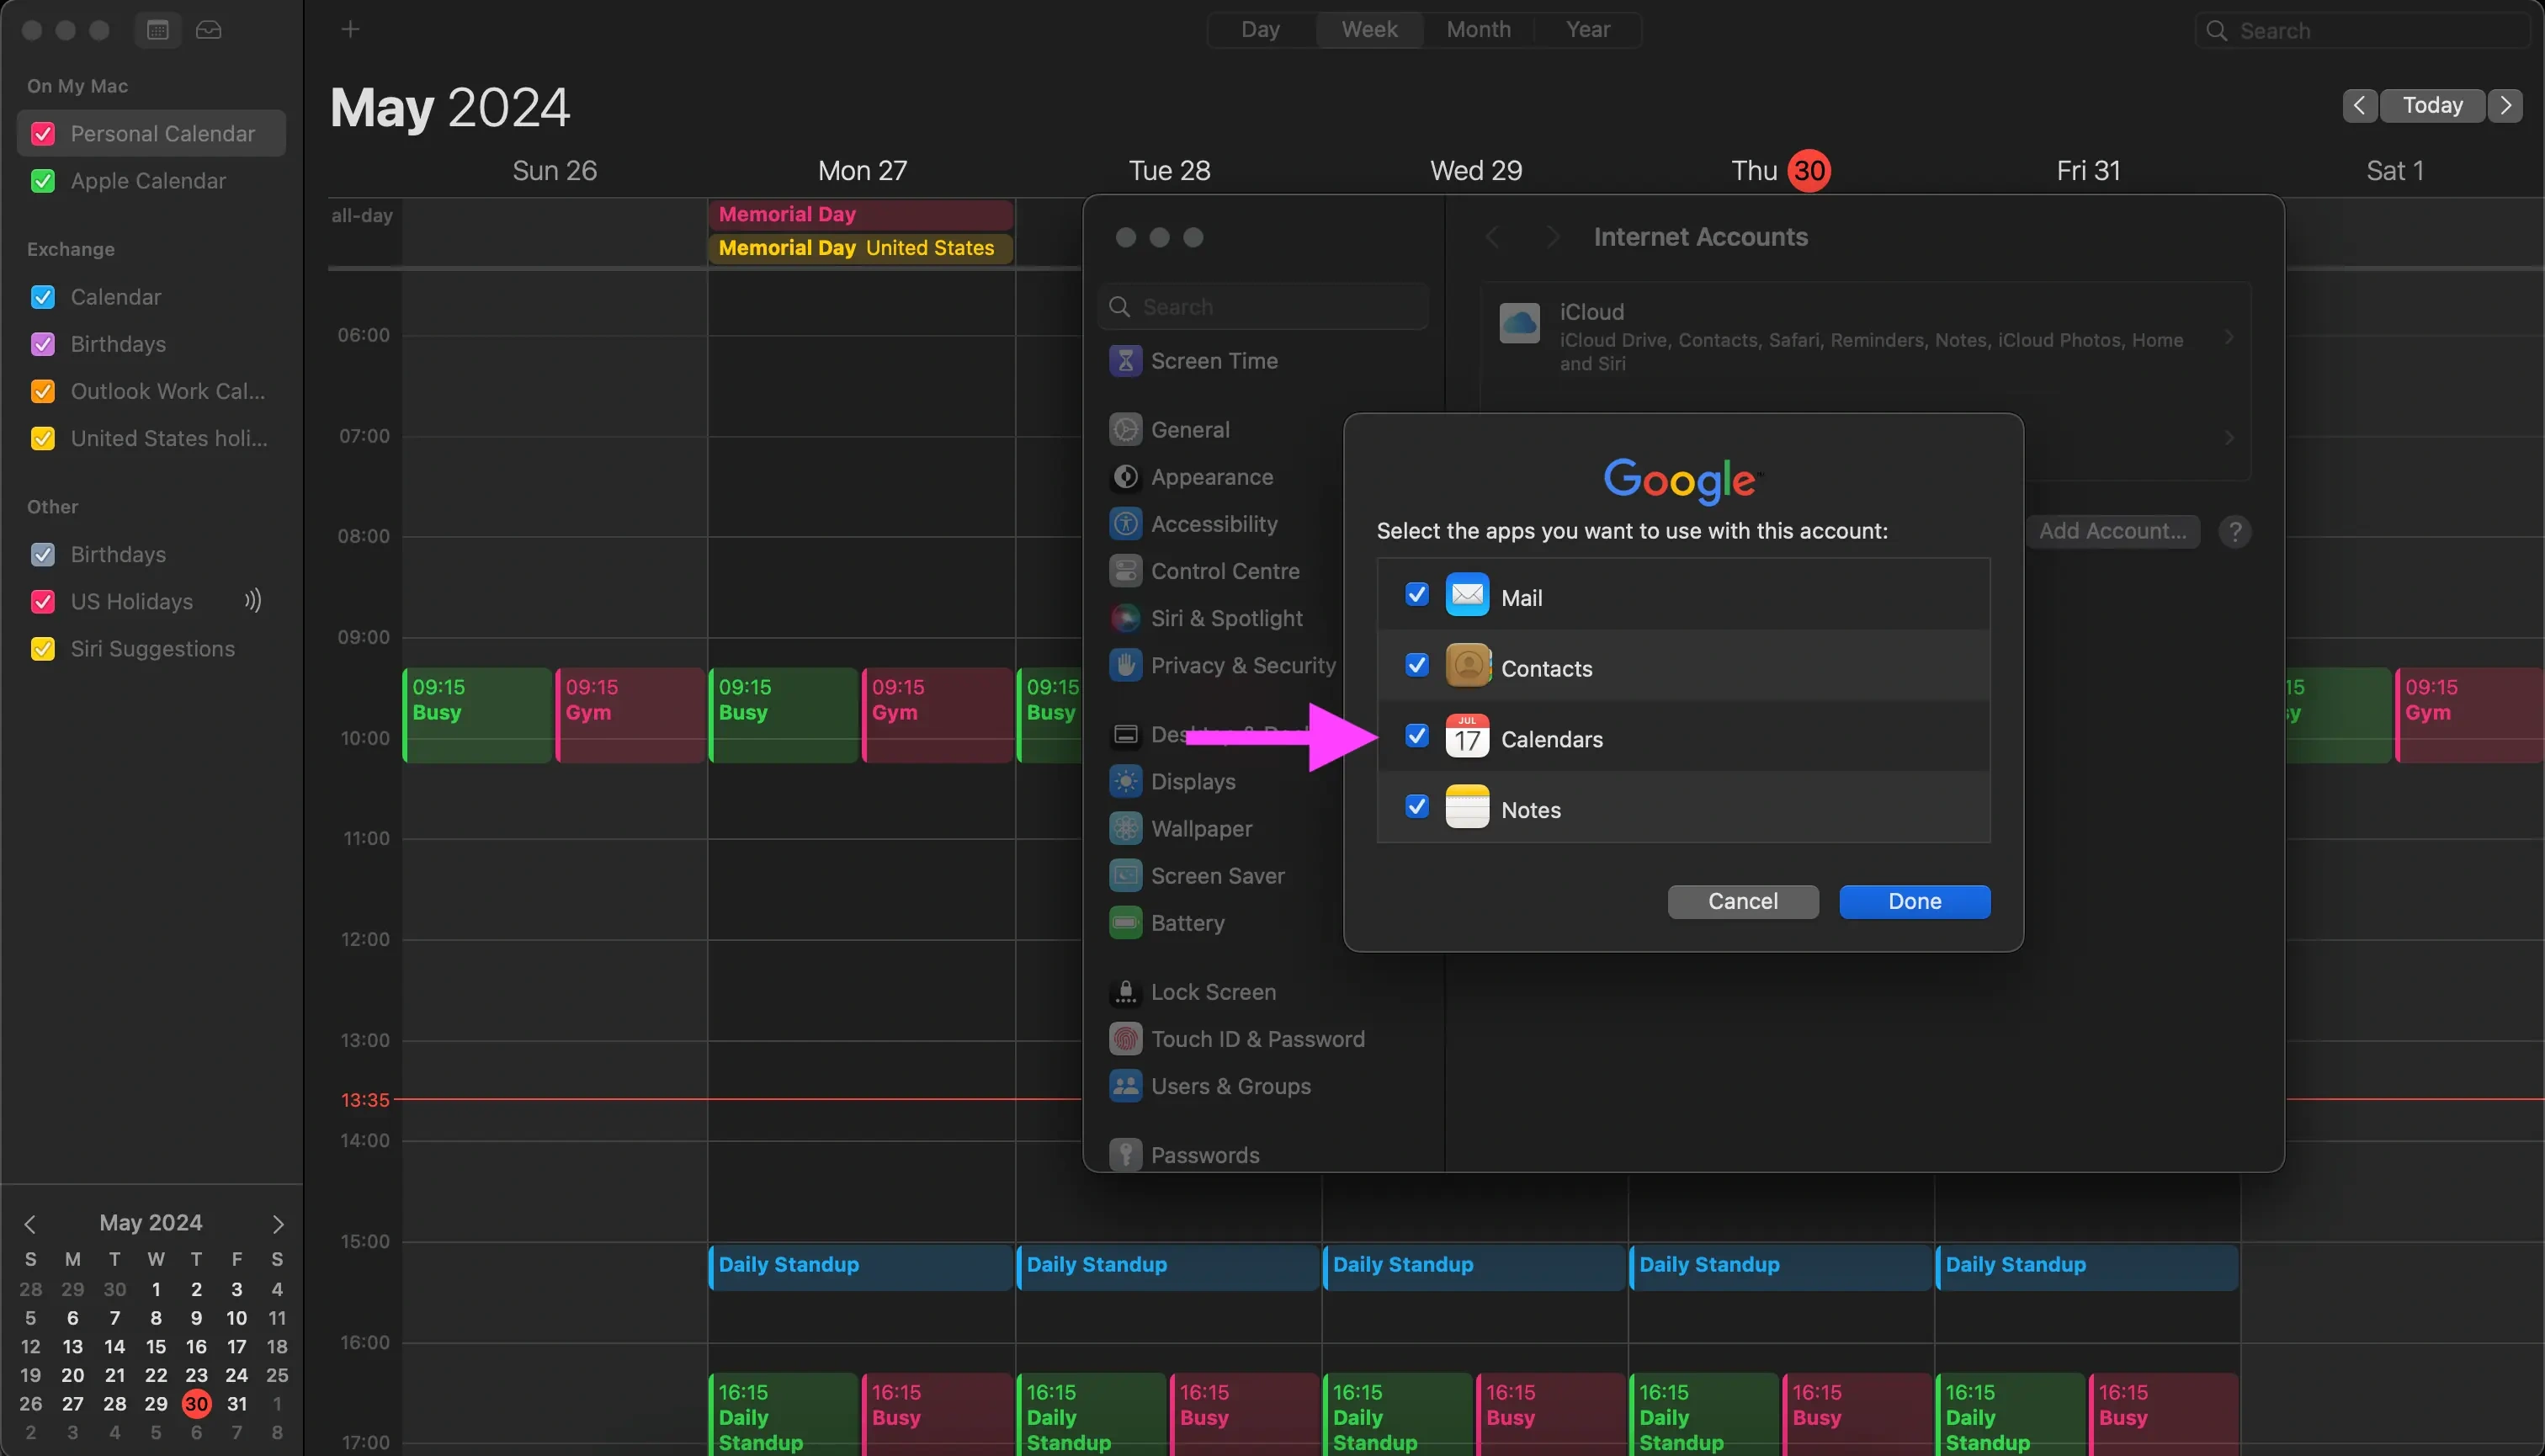 Apple Calendar - Select Google apps